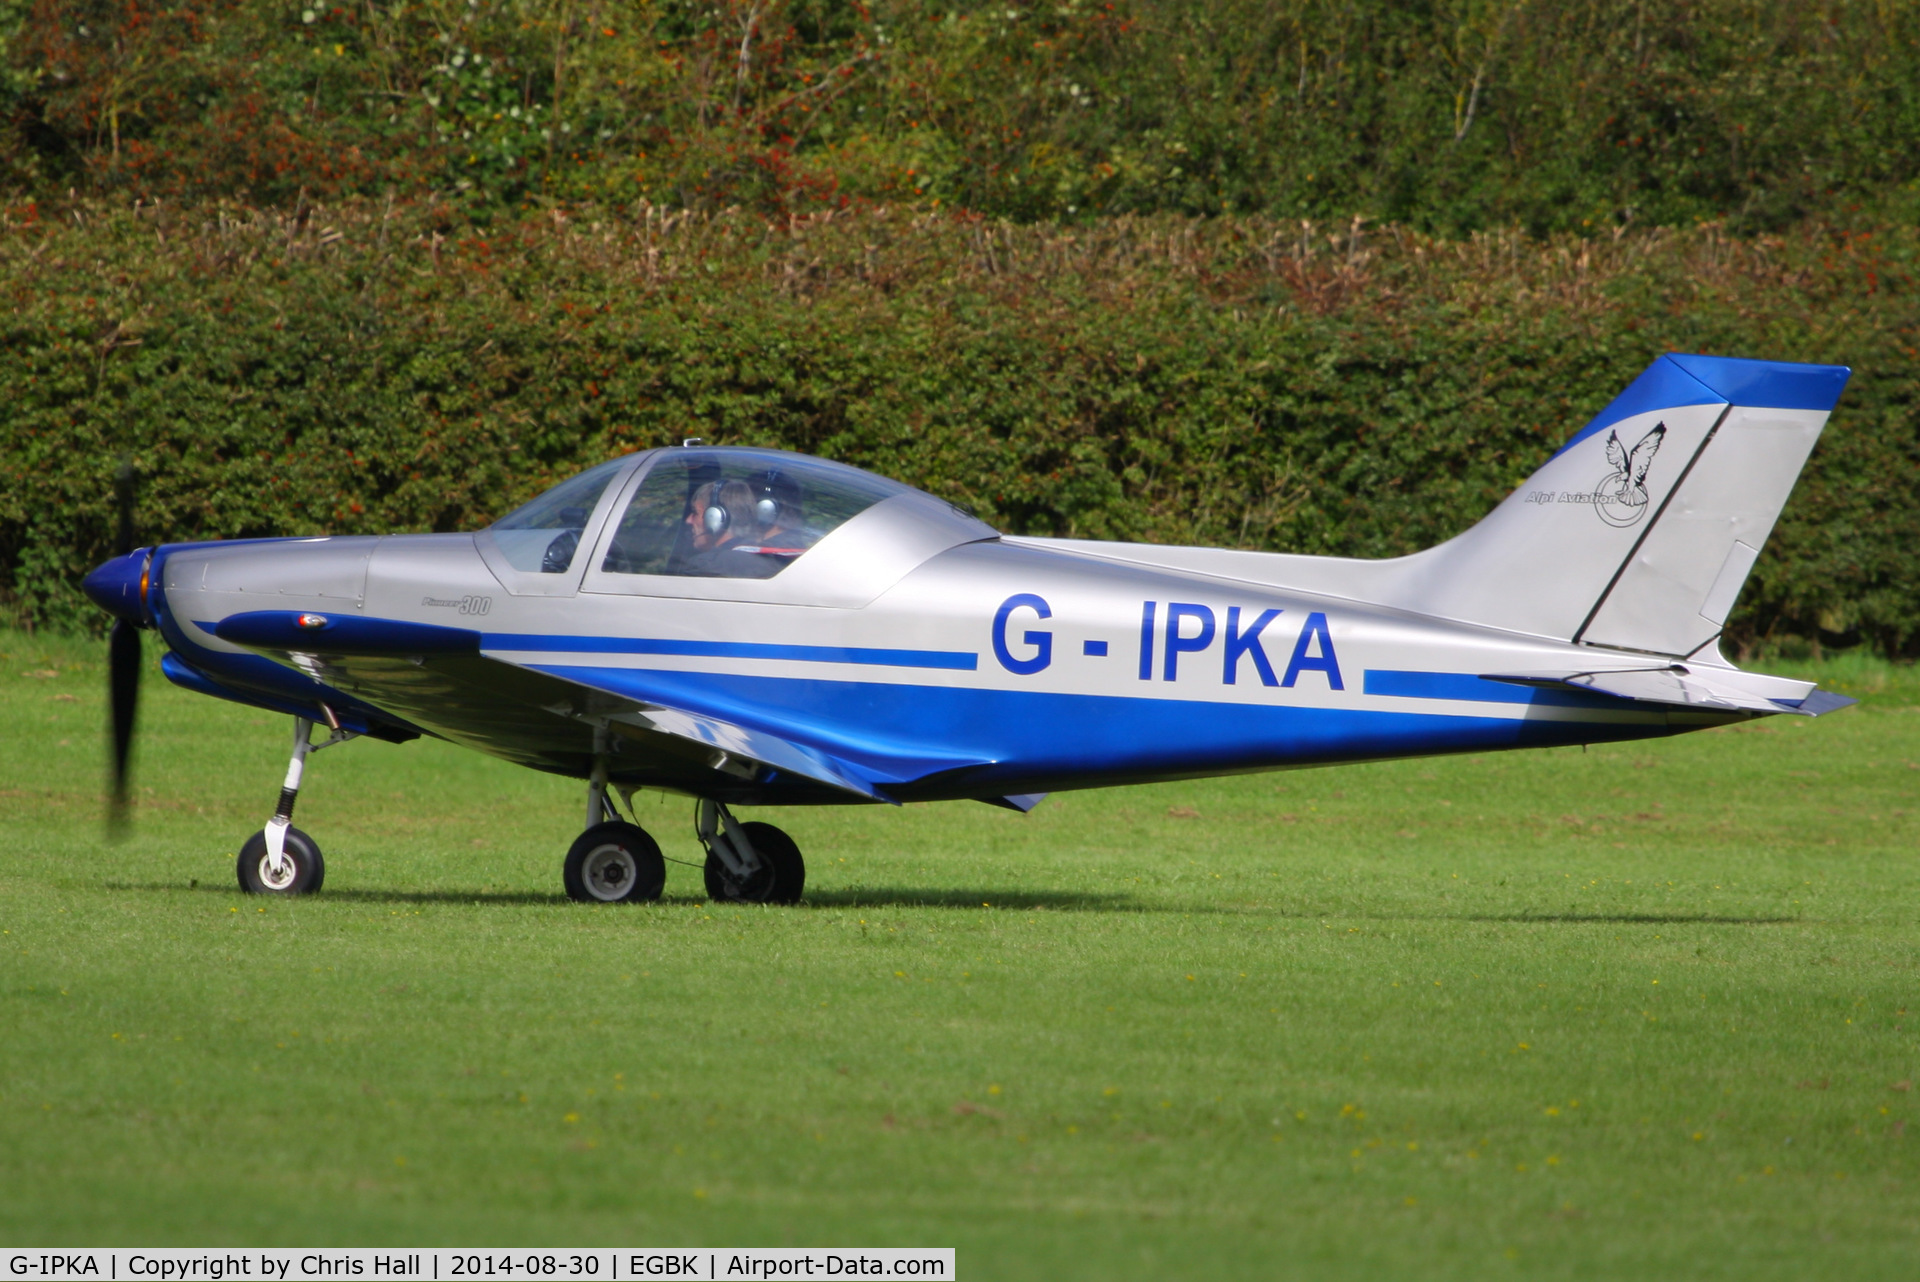 G-IPKA, 2005 Alpi Aviation Pioneer 300 C/N PFA 330-14355, at the LAA Rally 2014, Sywell